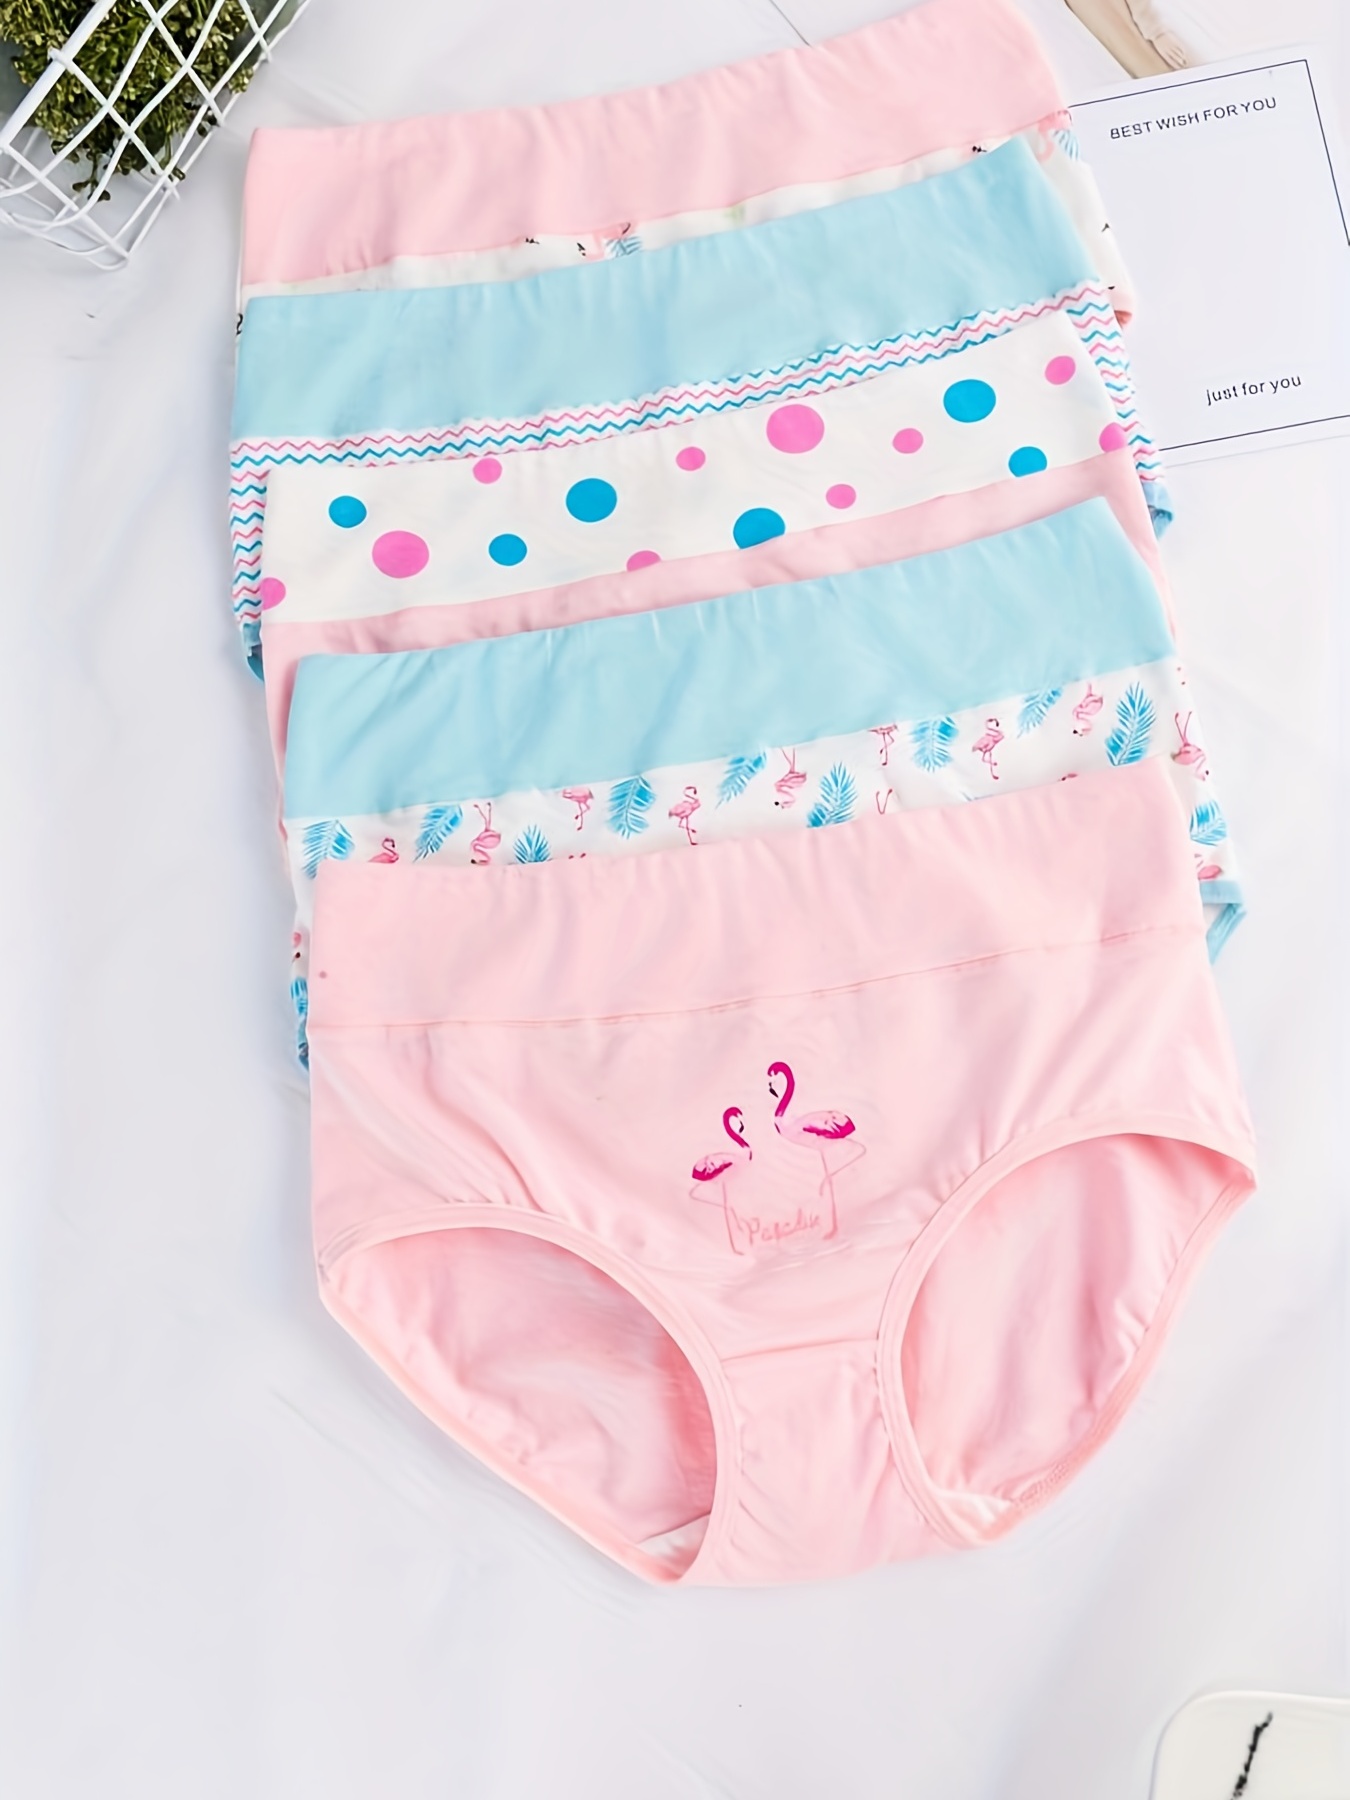 Kids Infant Baby Girls Underpants Cute Cartoon Print Top Underwear